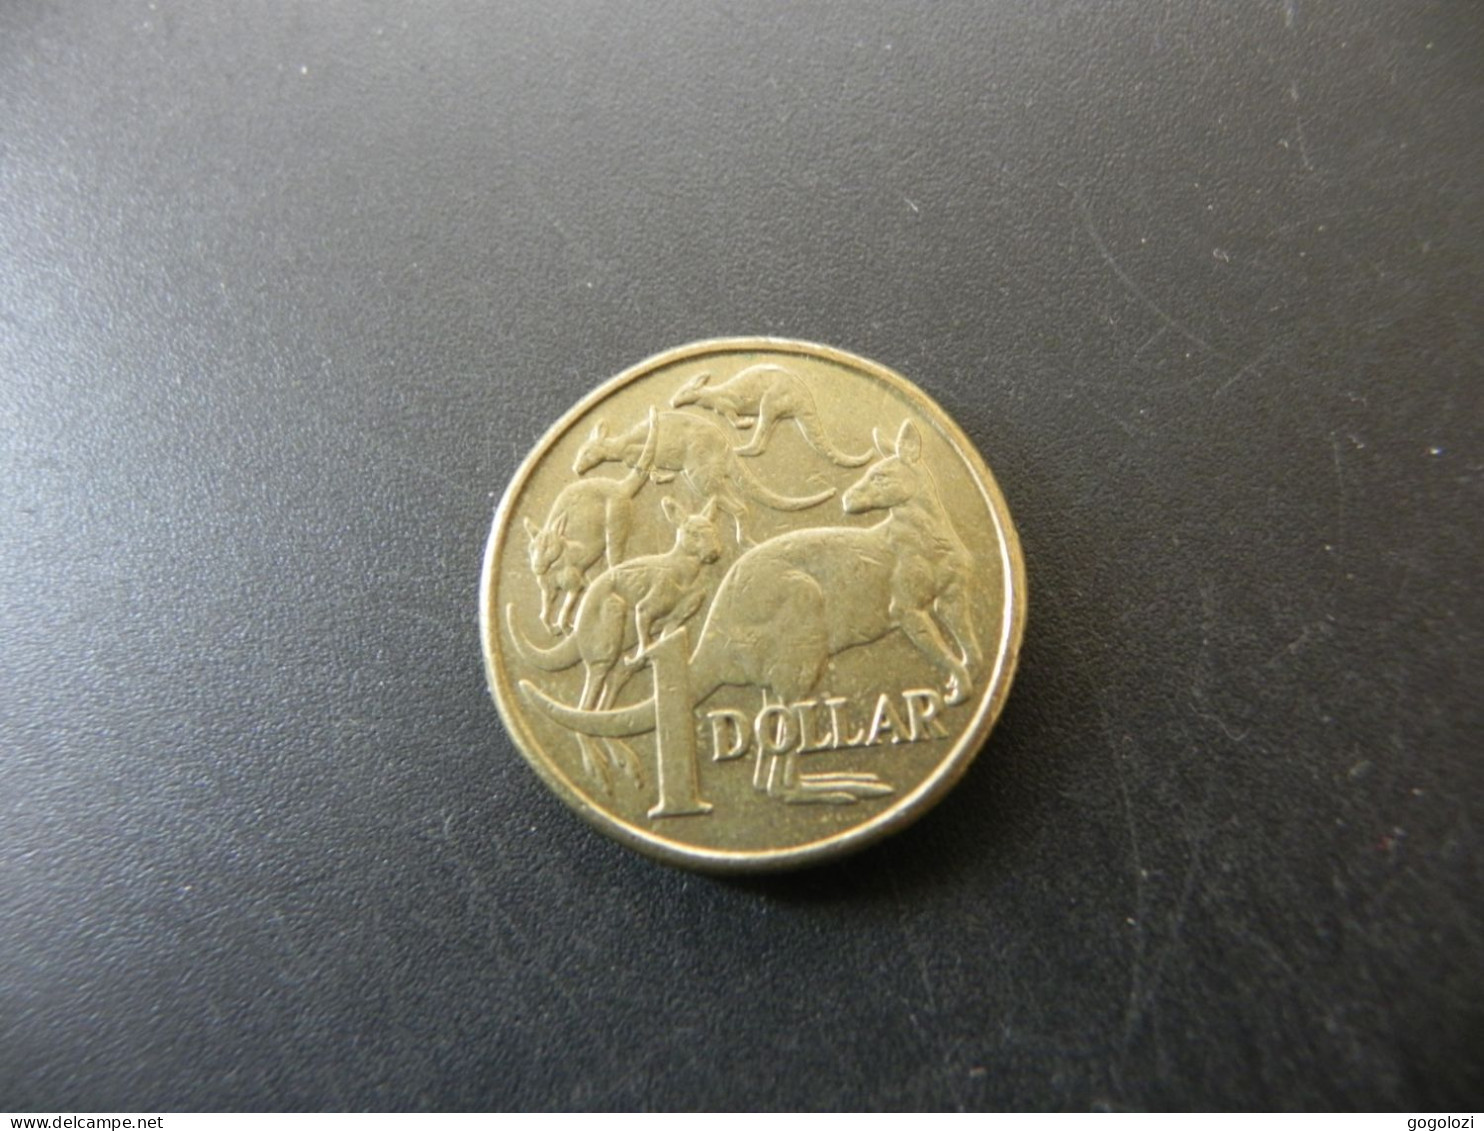 Australia 1 Dollar 2010 - Dollar